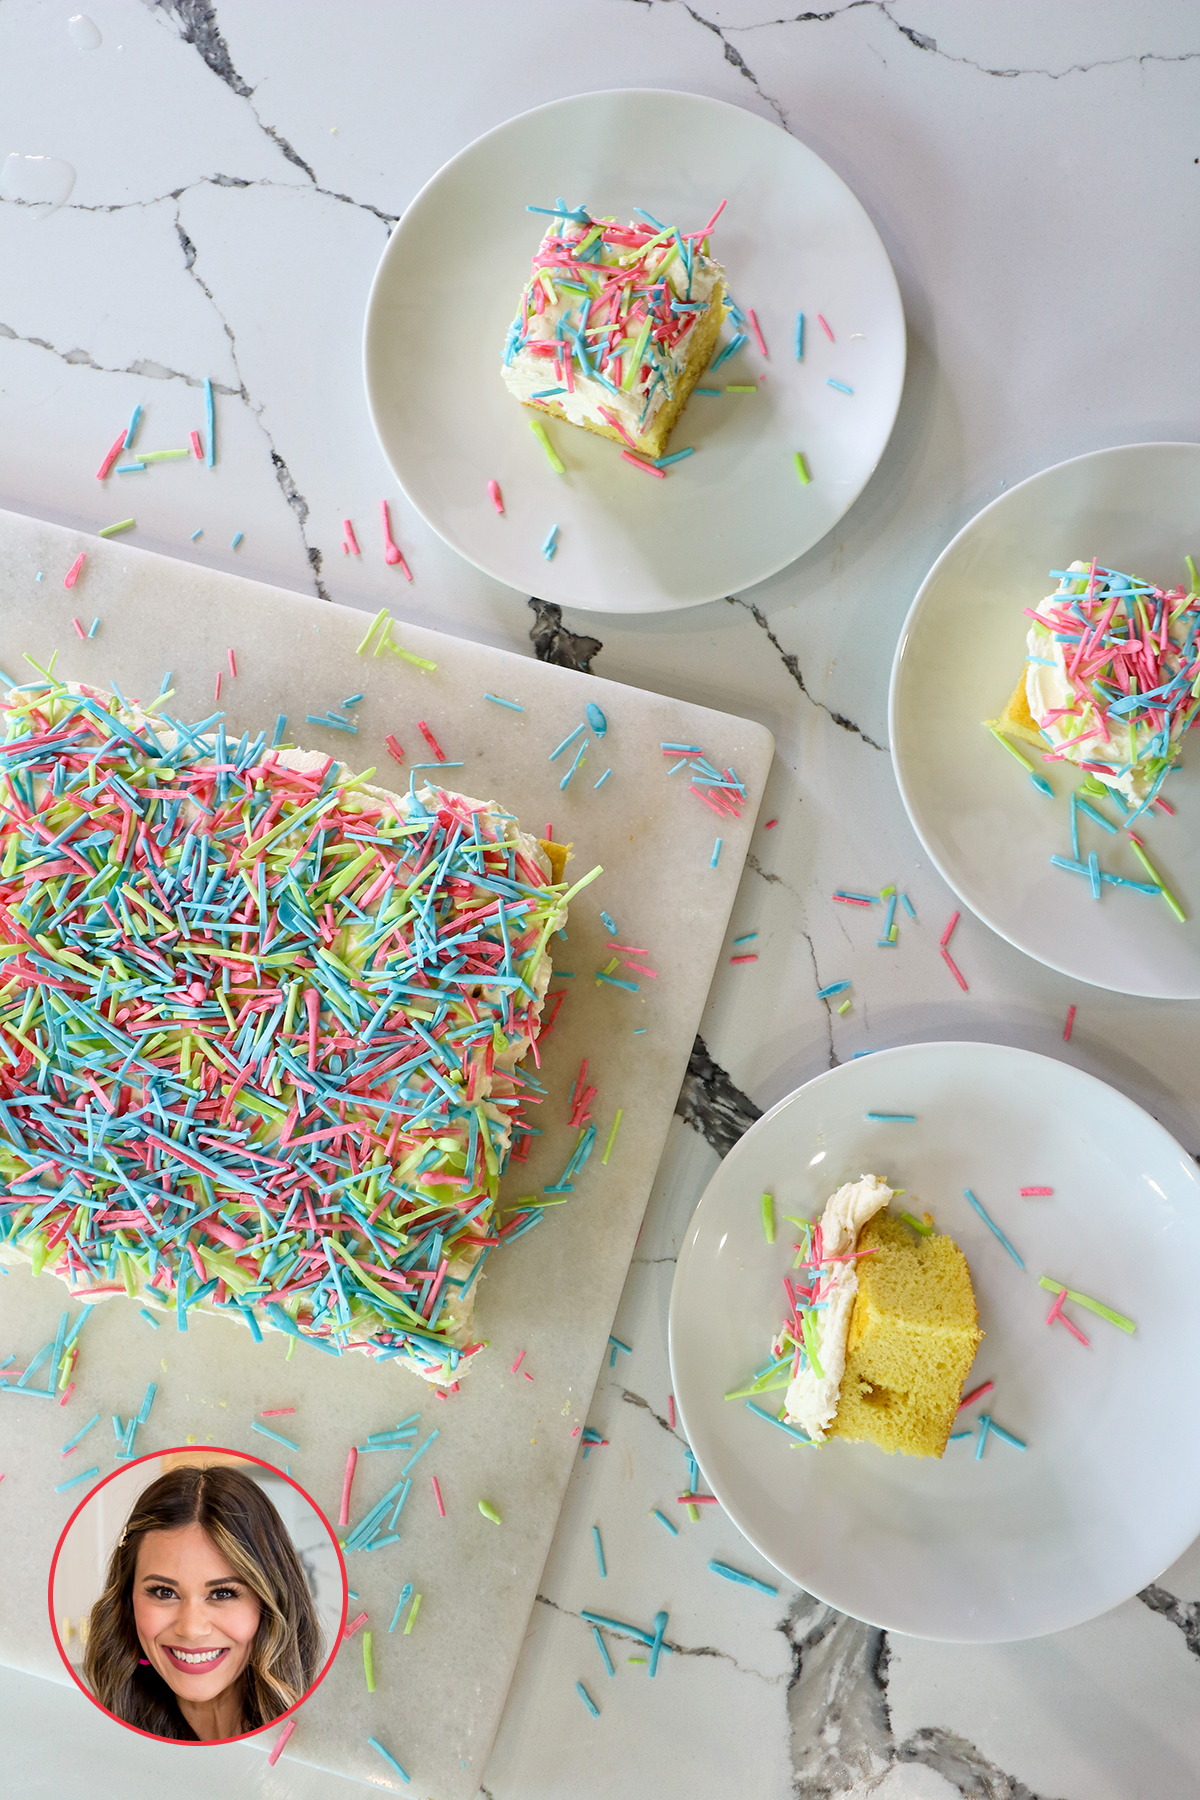 Homemade Sprinkles on a lovely yellow cake.